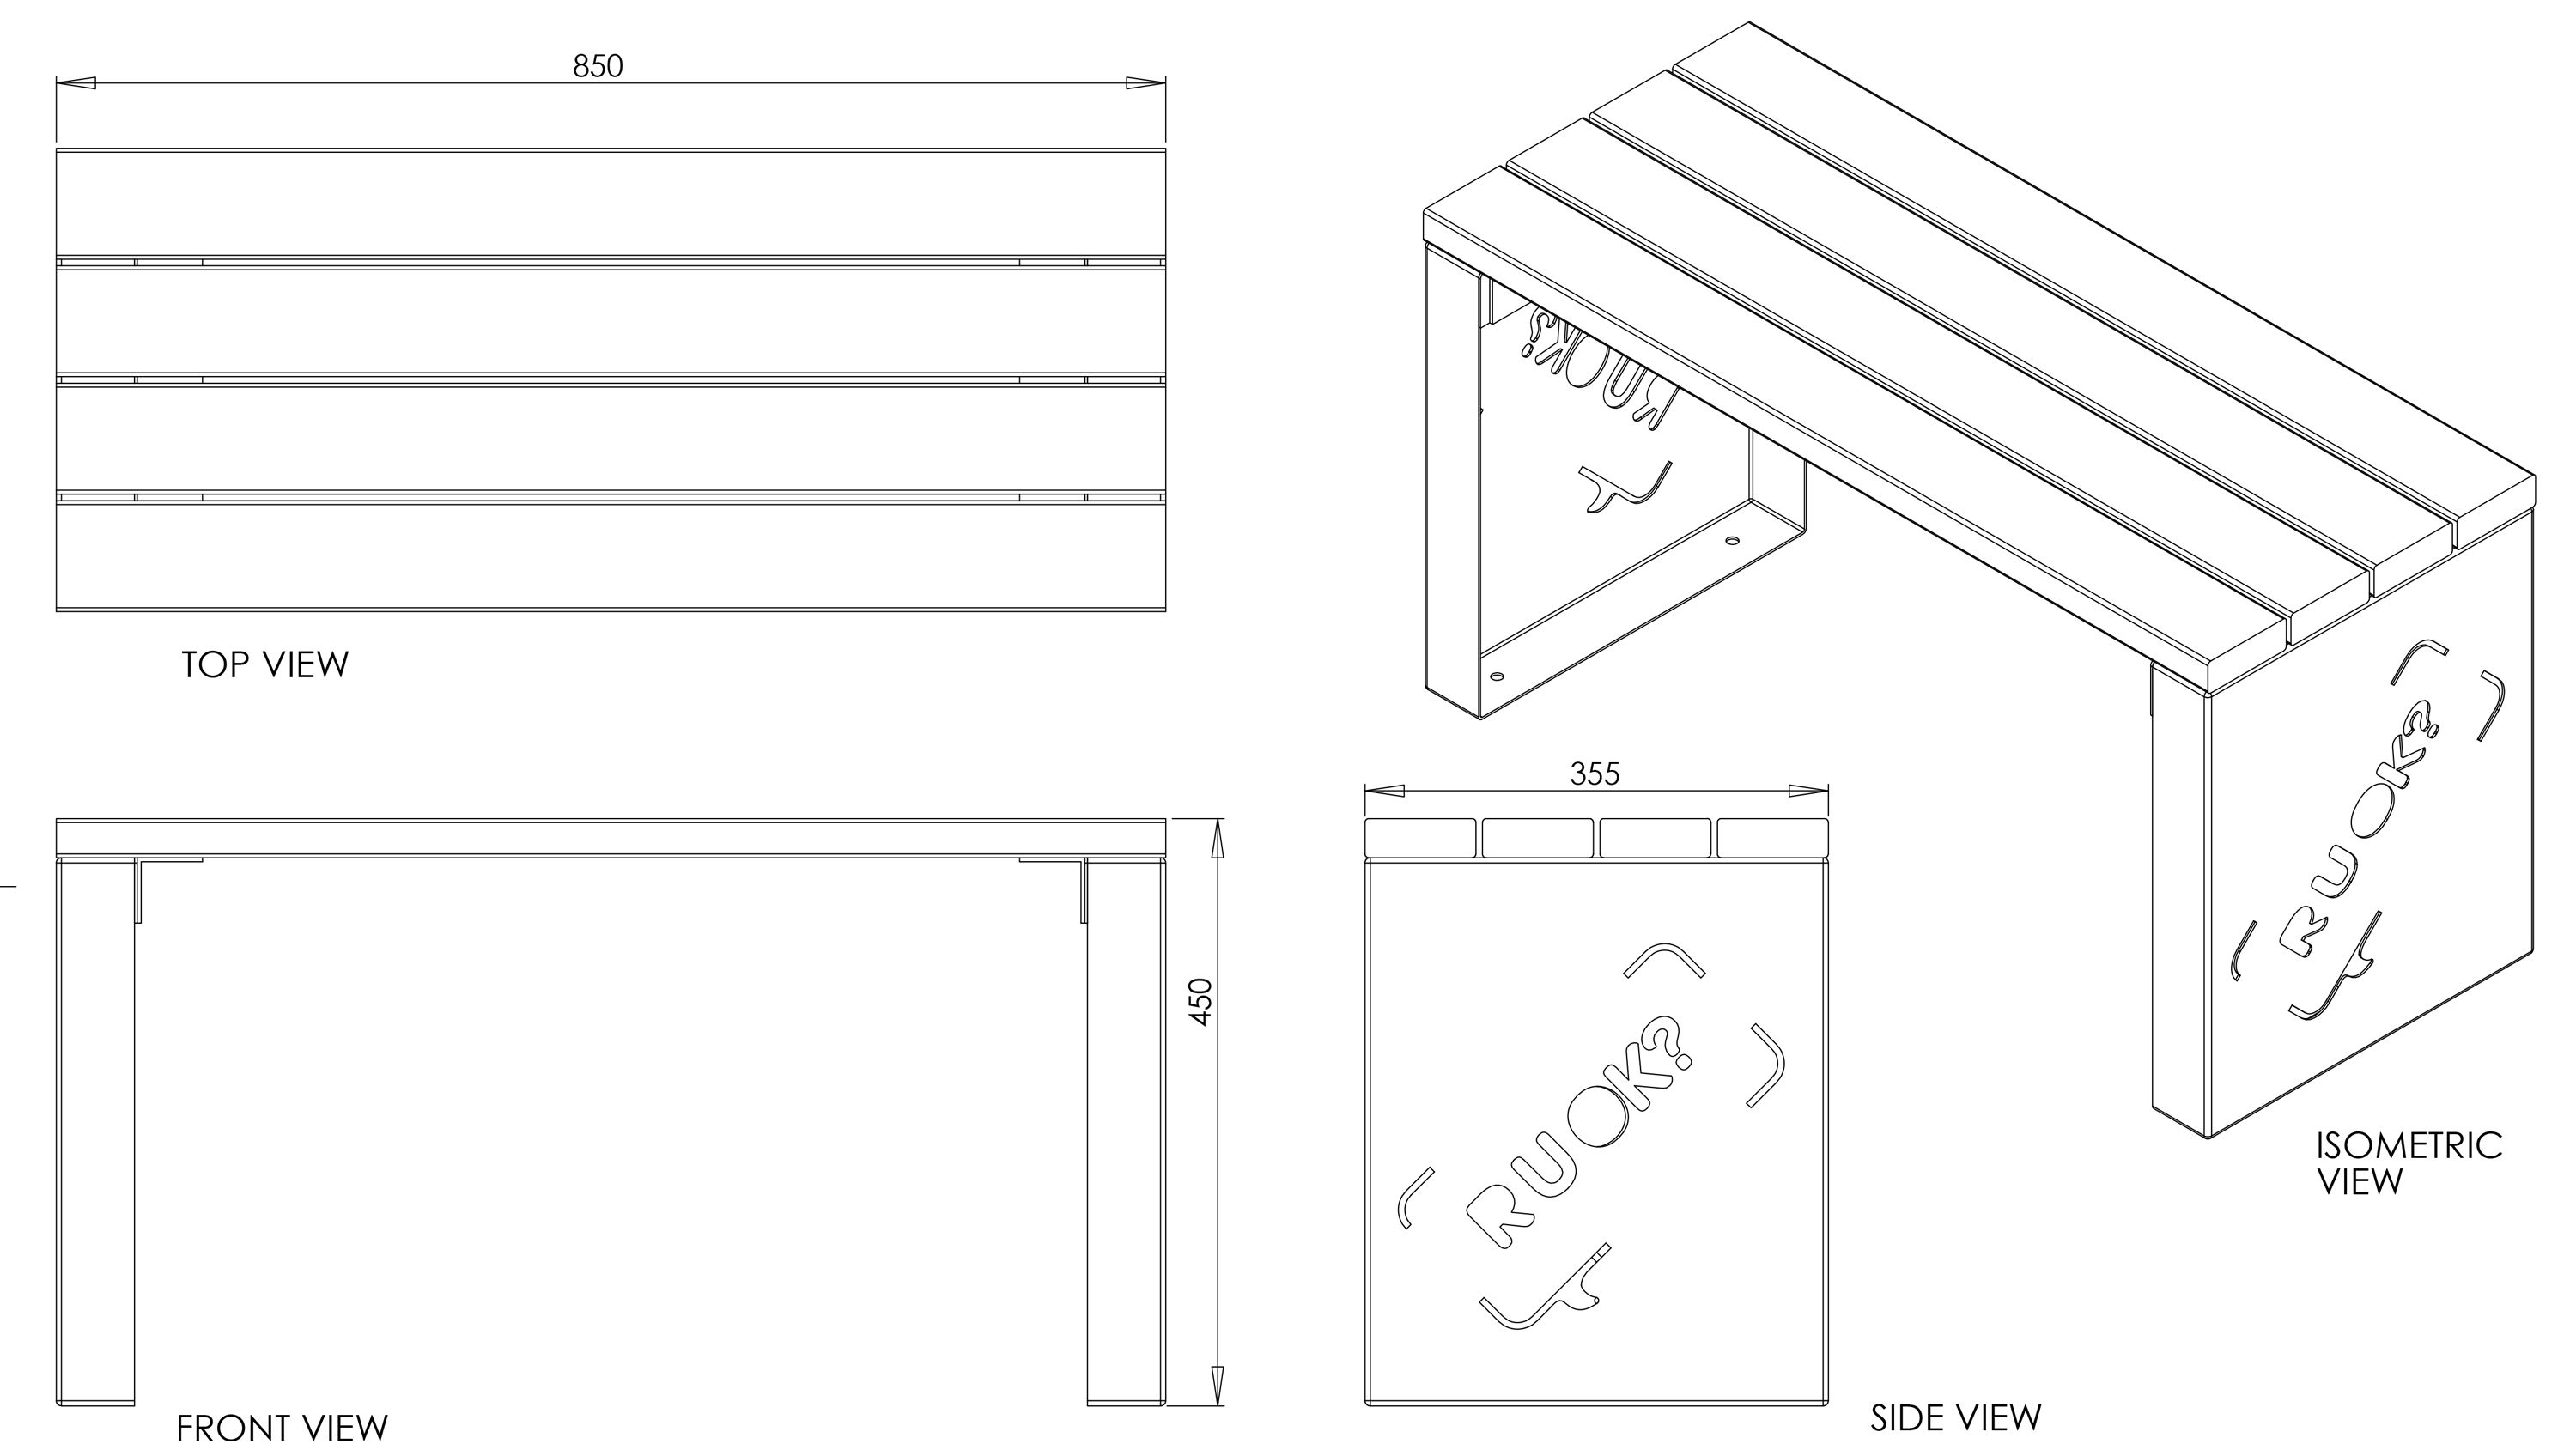 R-U-OK Bench drawings